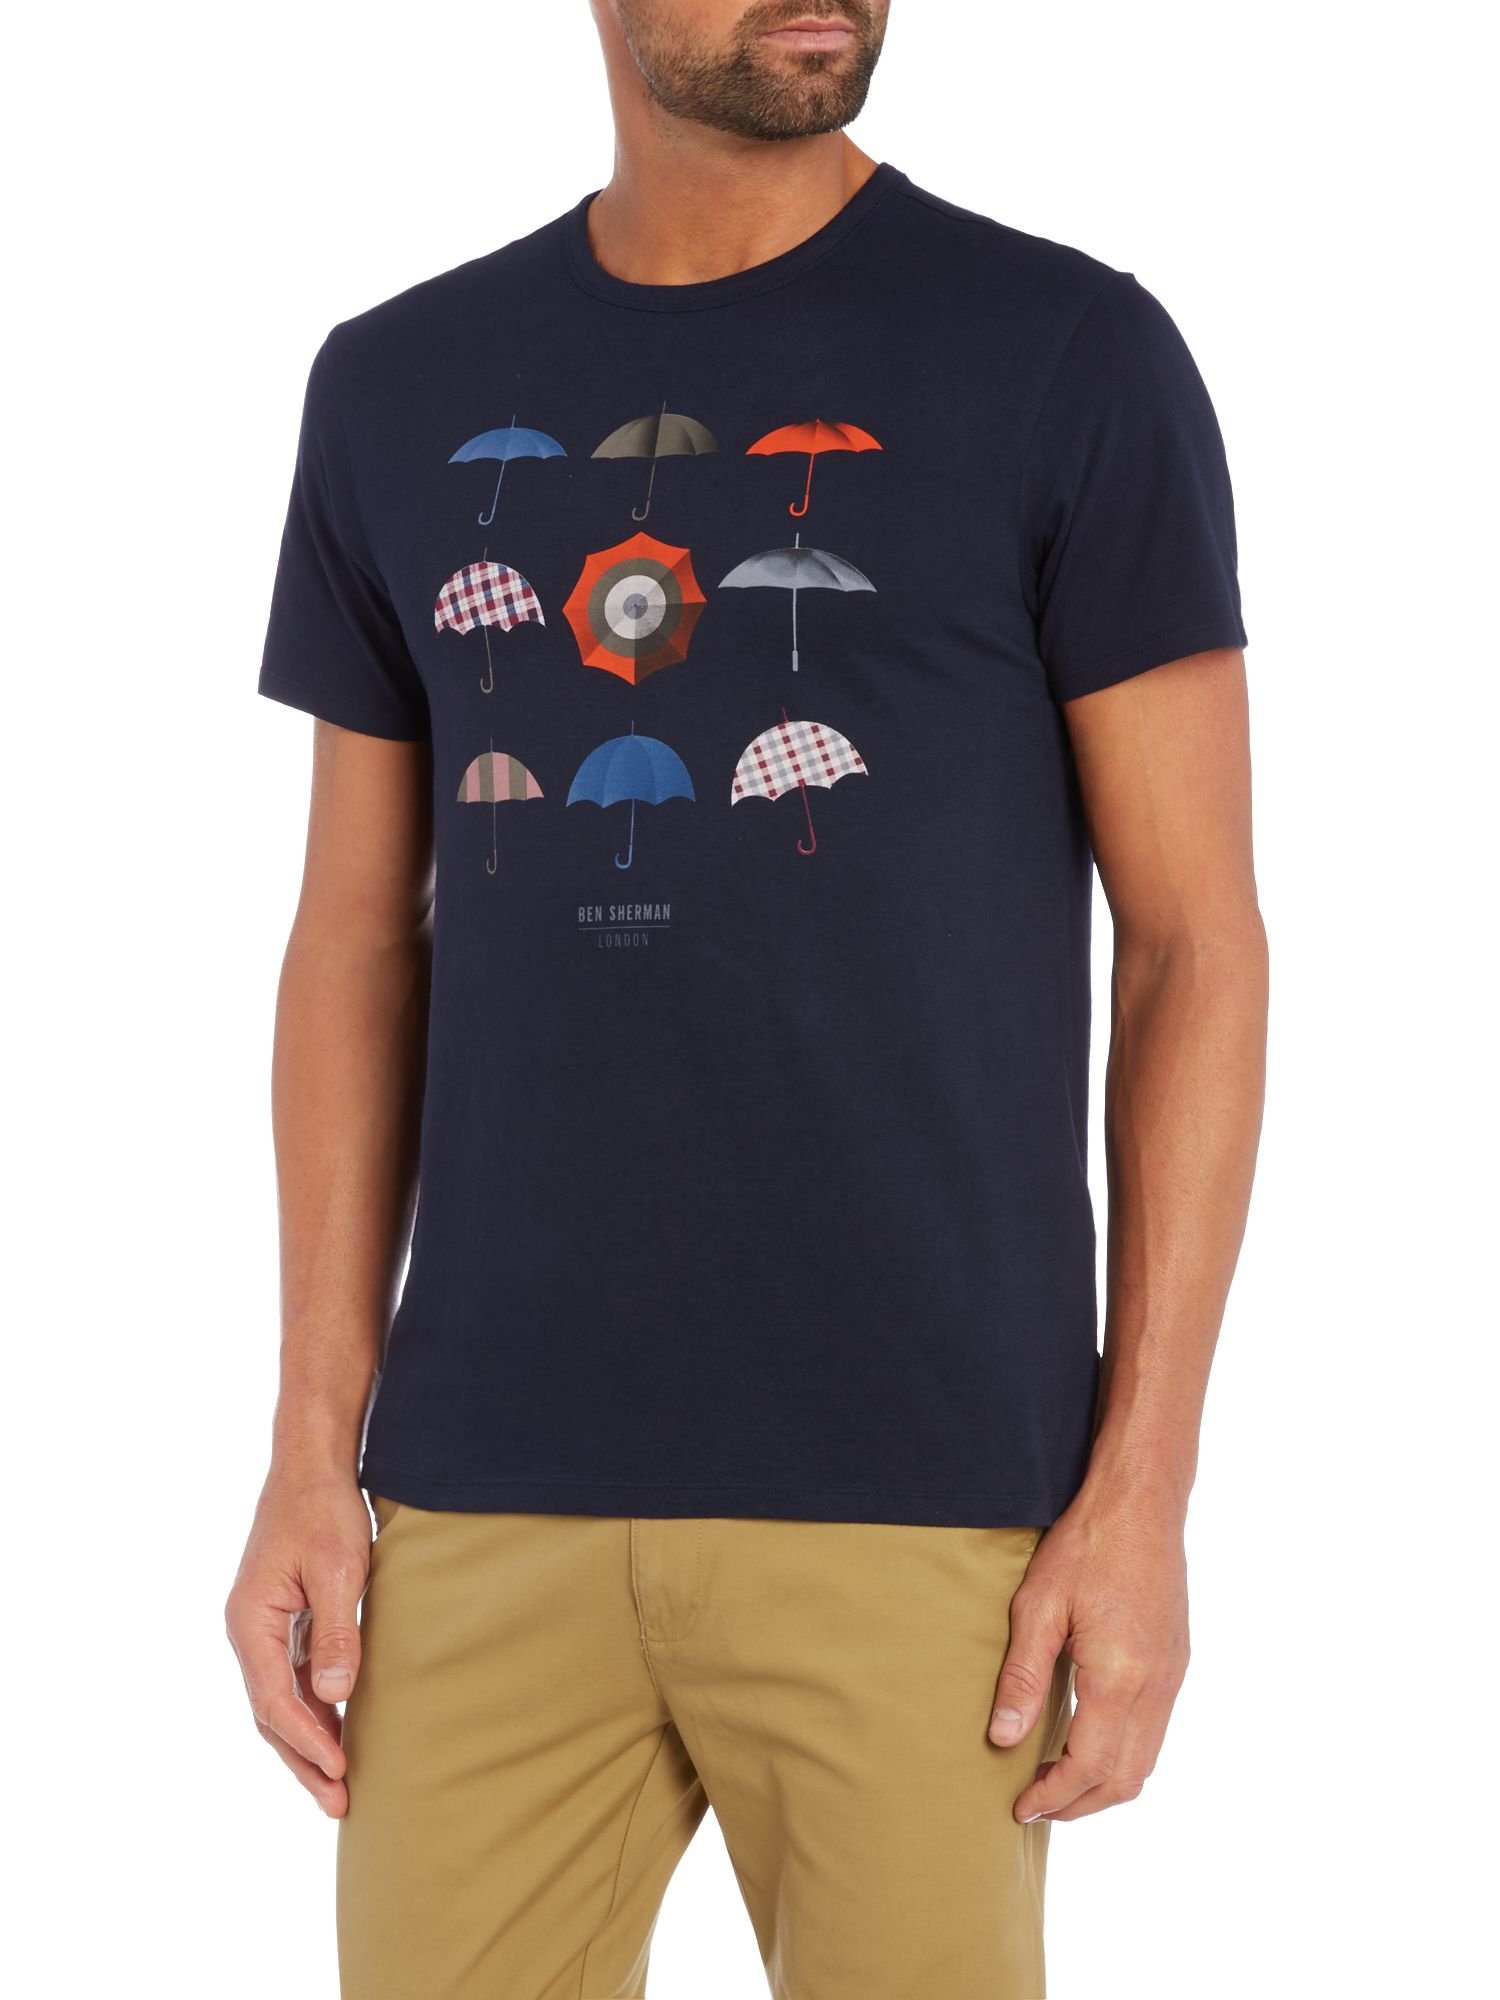 Ben Sherman Heritage Umbrella Print T Shirt In Blue For Men Lyst.